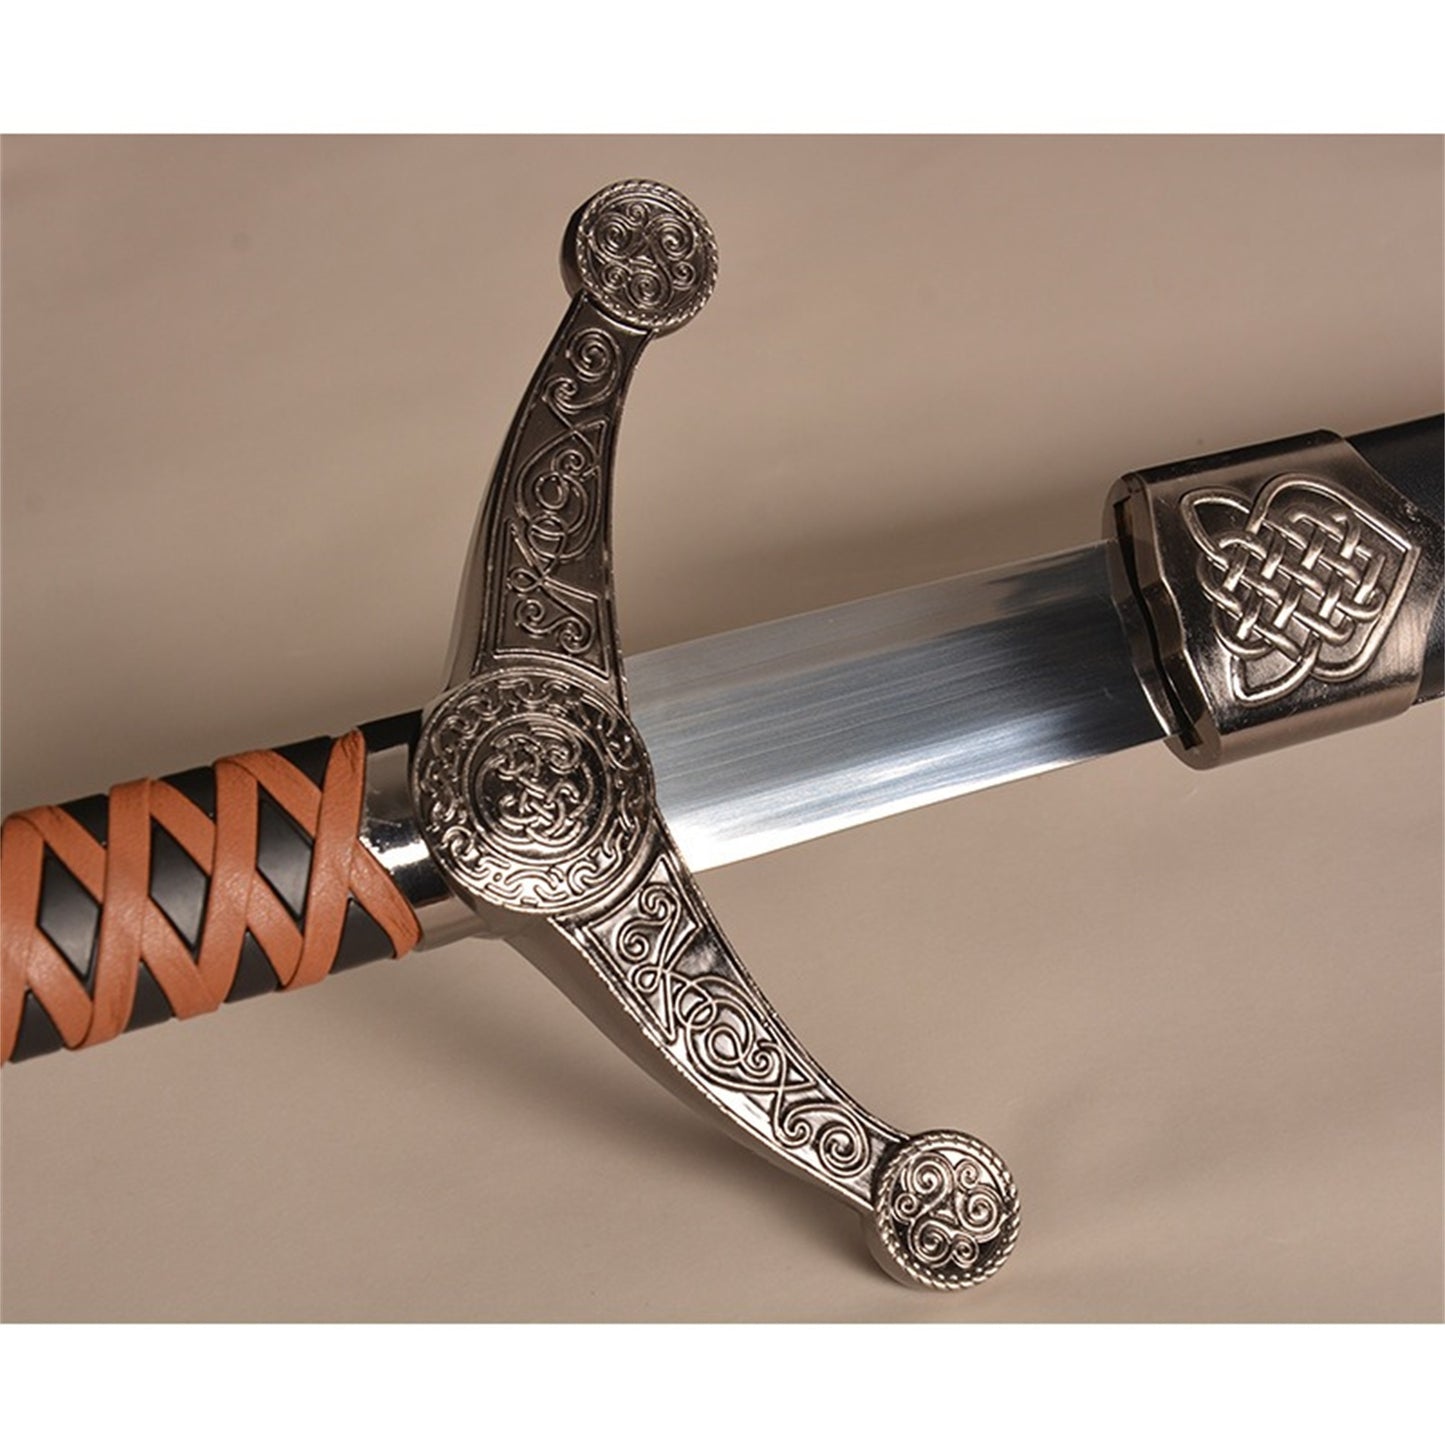 Celtic Knight Sword Life-size Cosplay Prop Metal Replica